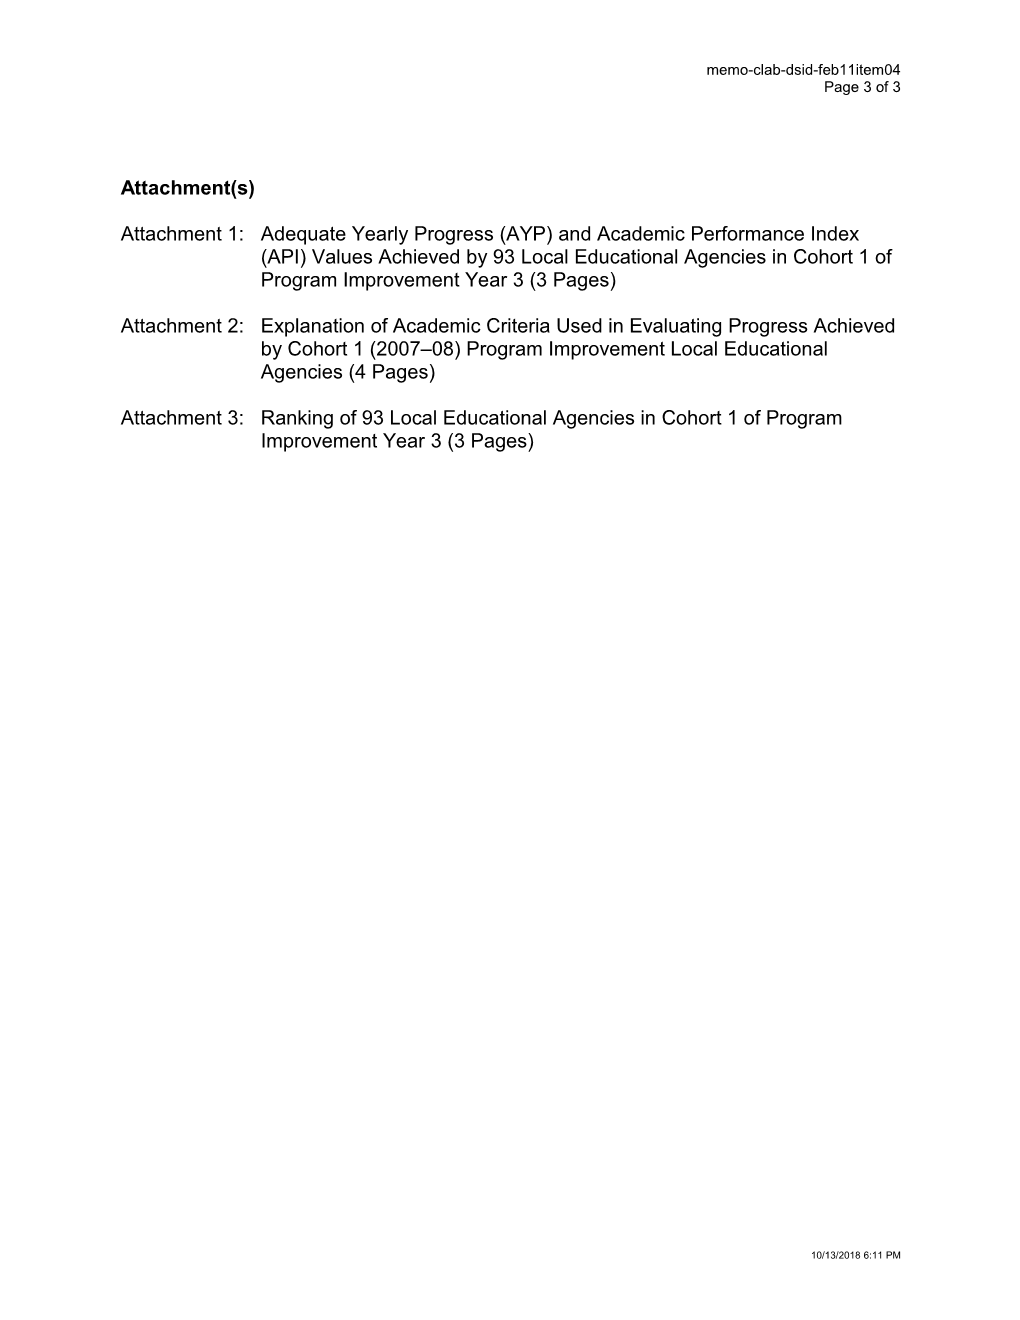 February 2011 Memorandum DSID Item 4 - Information Memorandum (CA State Board of Education)